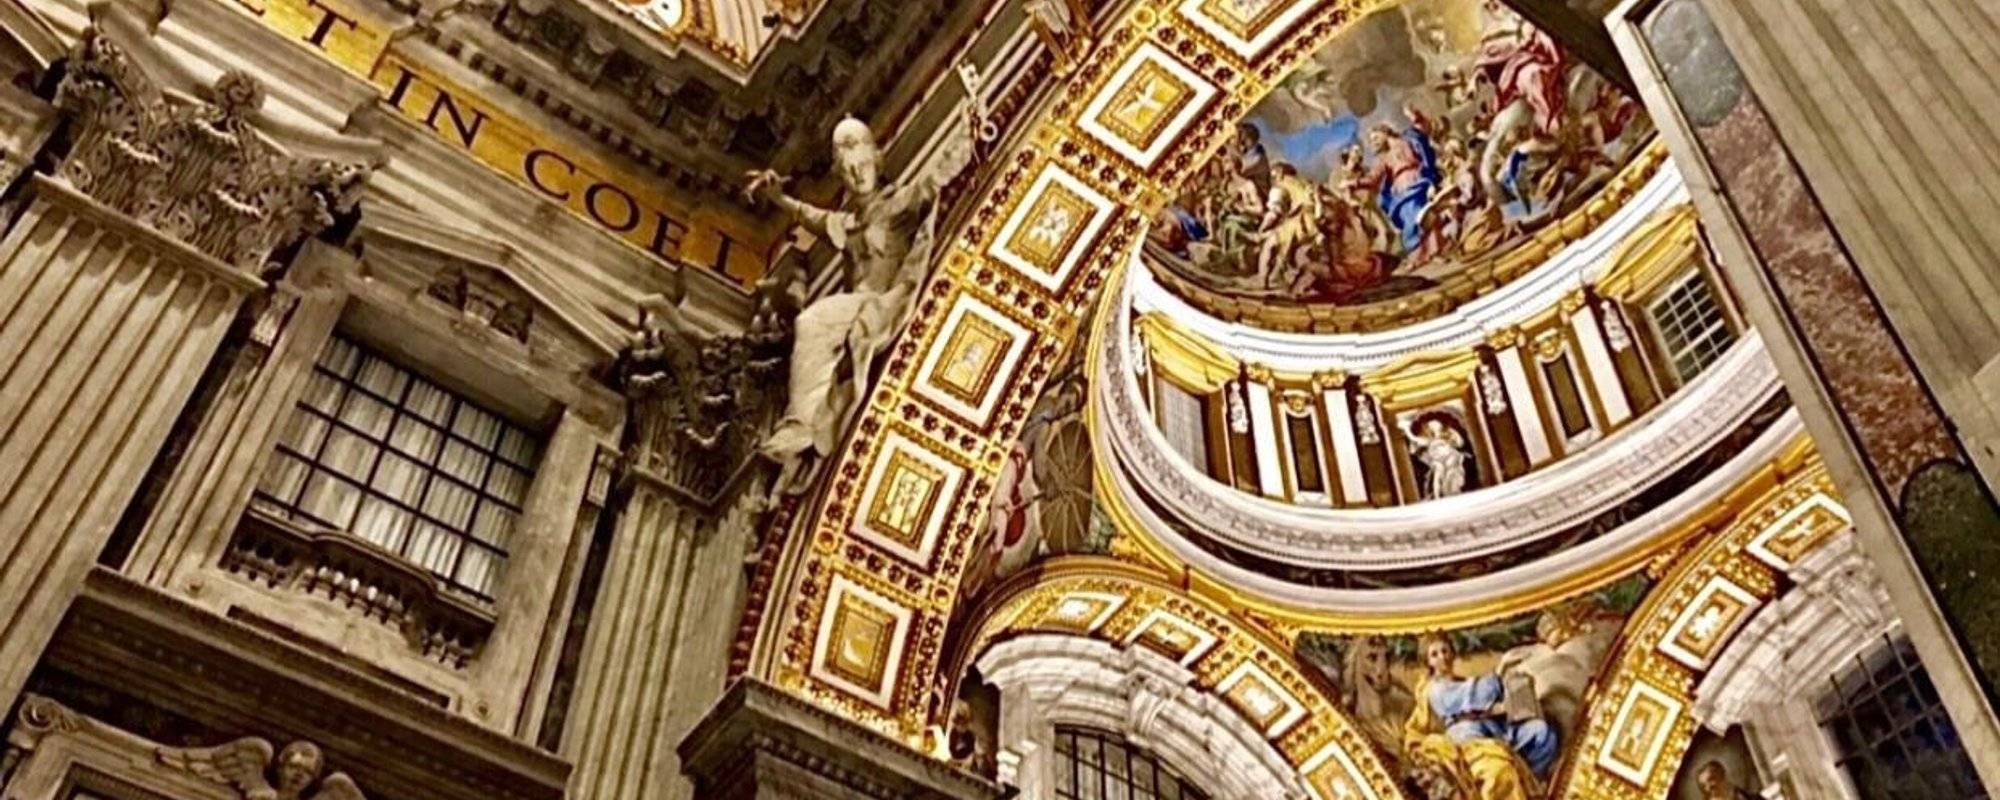 The Vatican - Vatican City, Italy